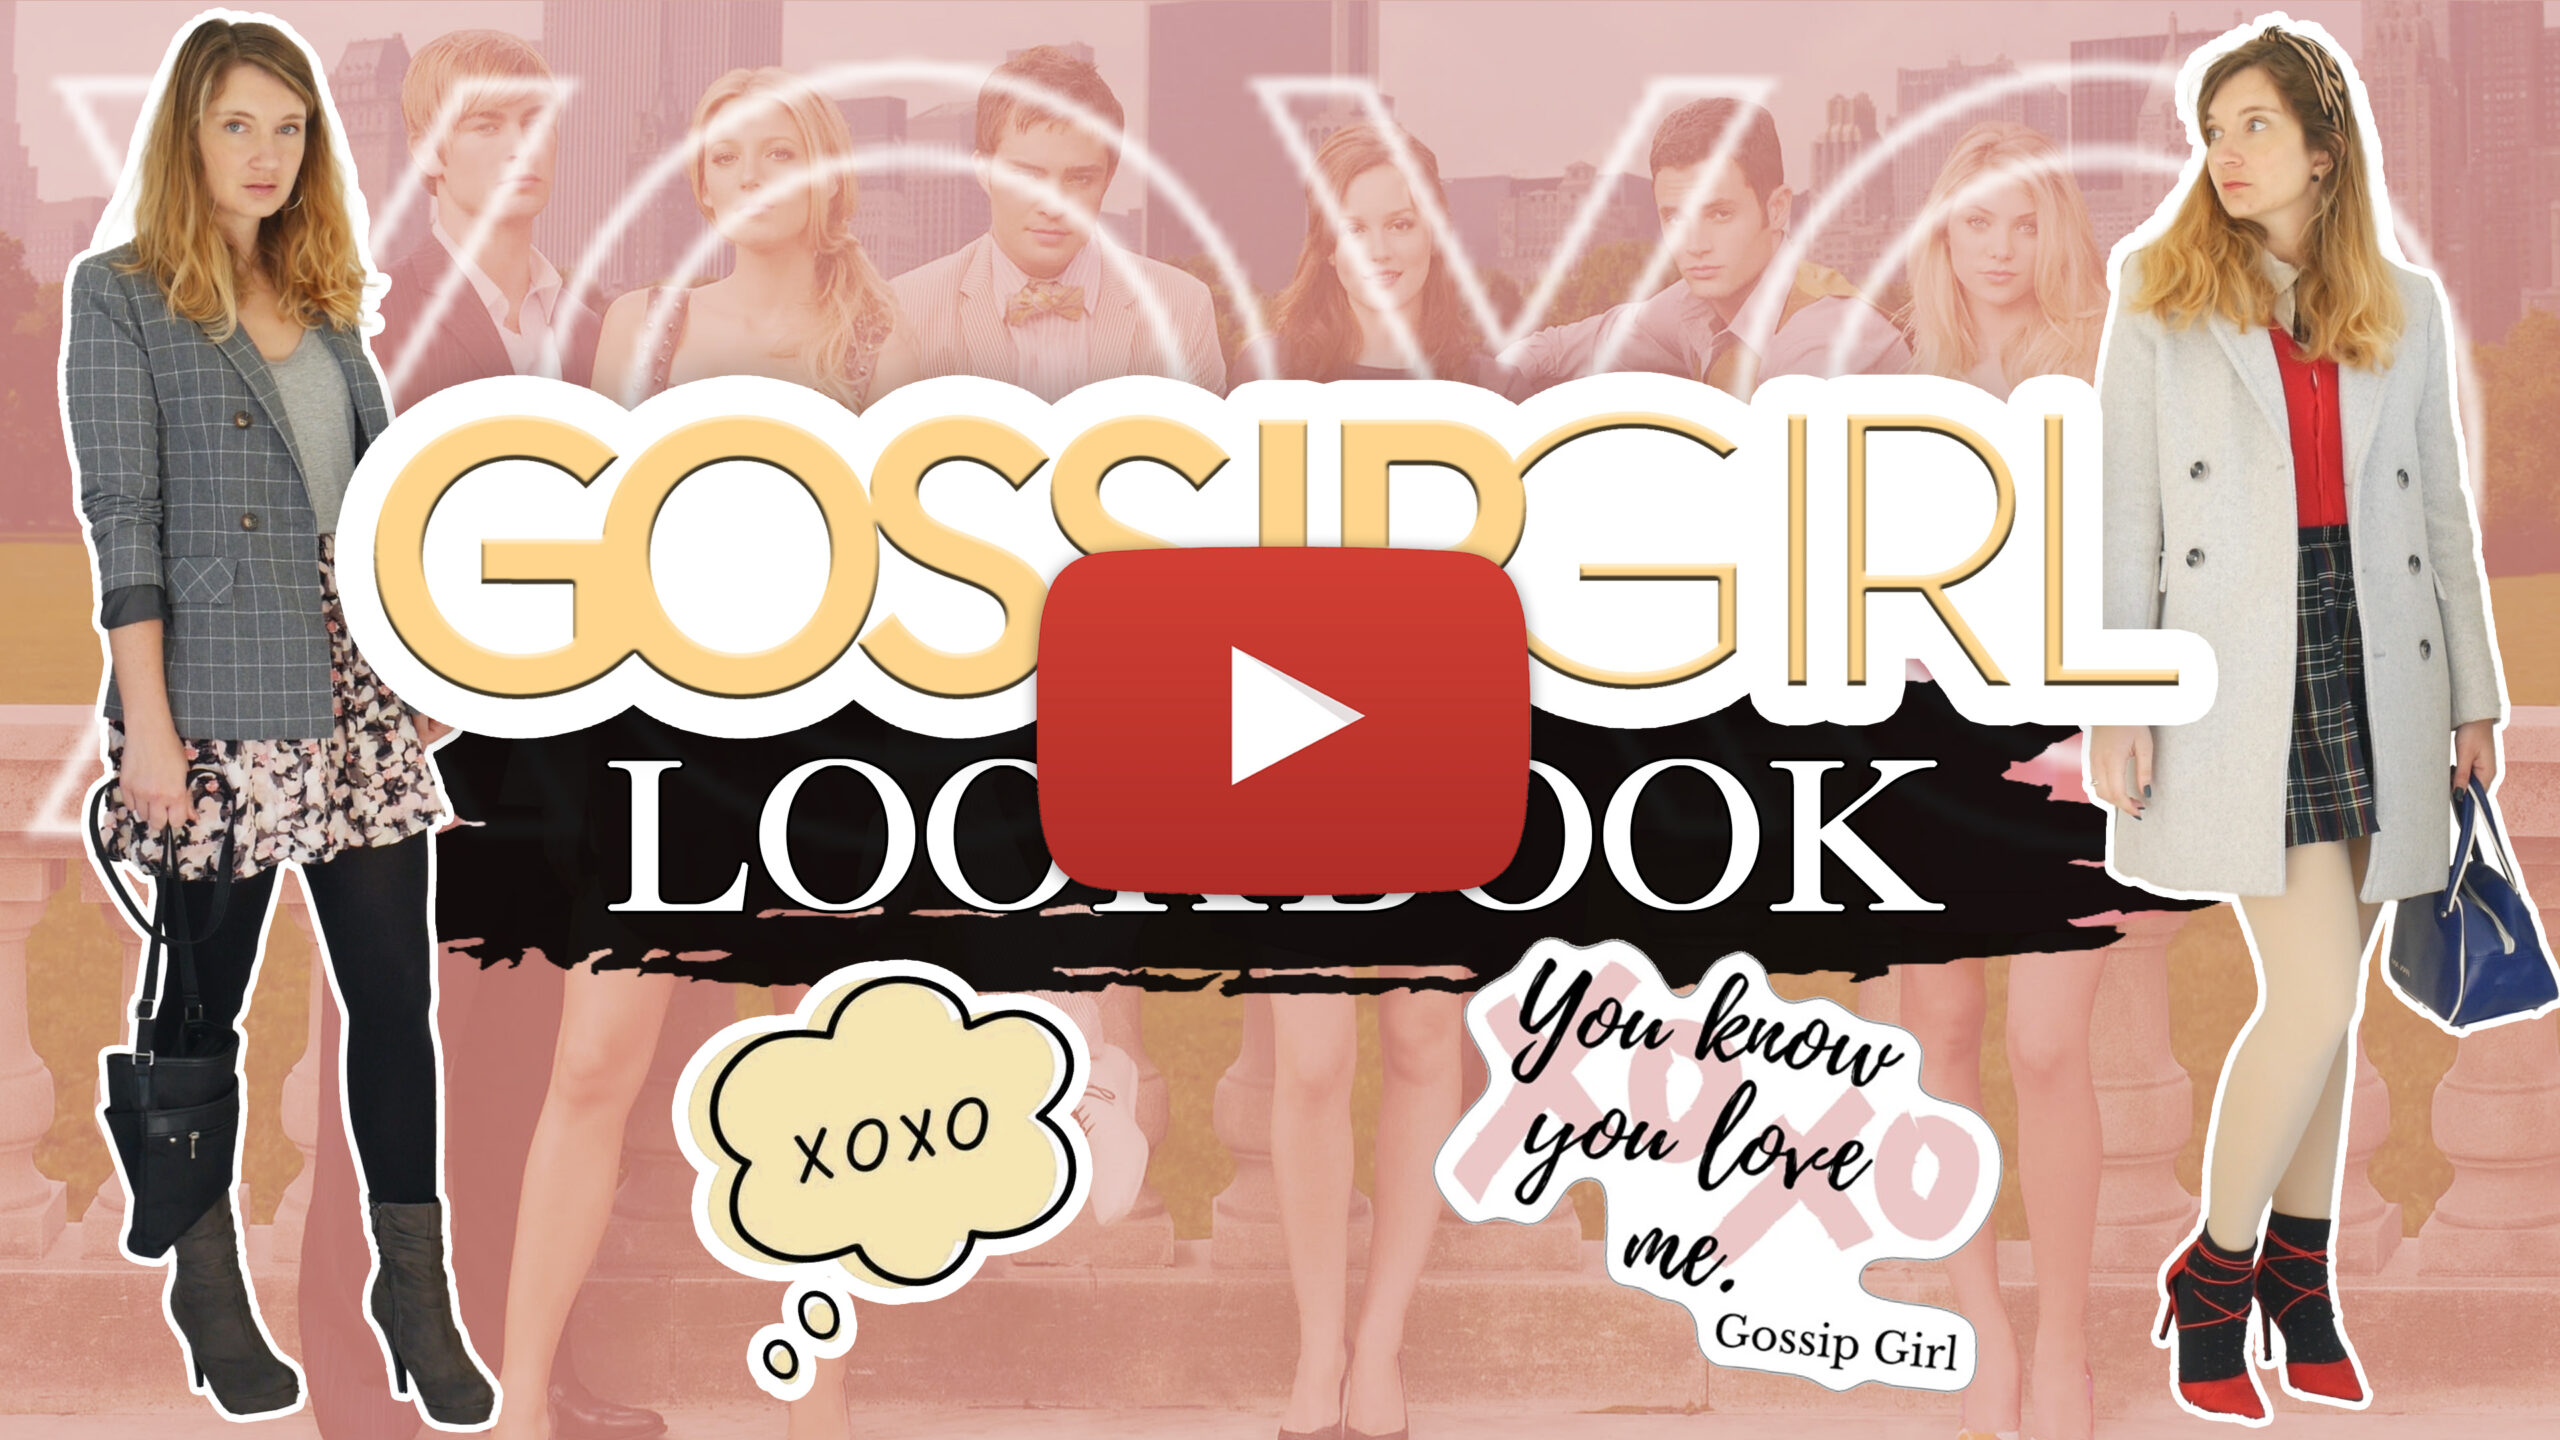 Gossip Girl: Season 4 DVD In-Store and Online